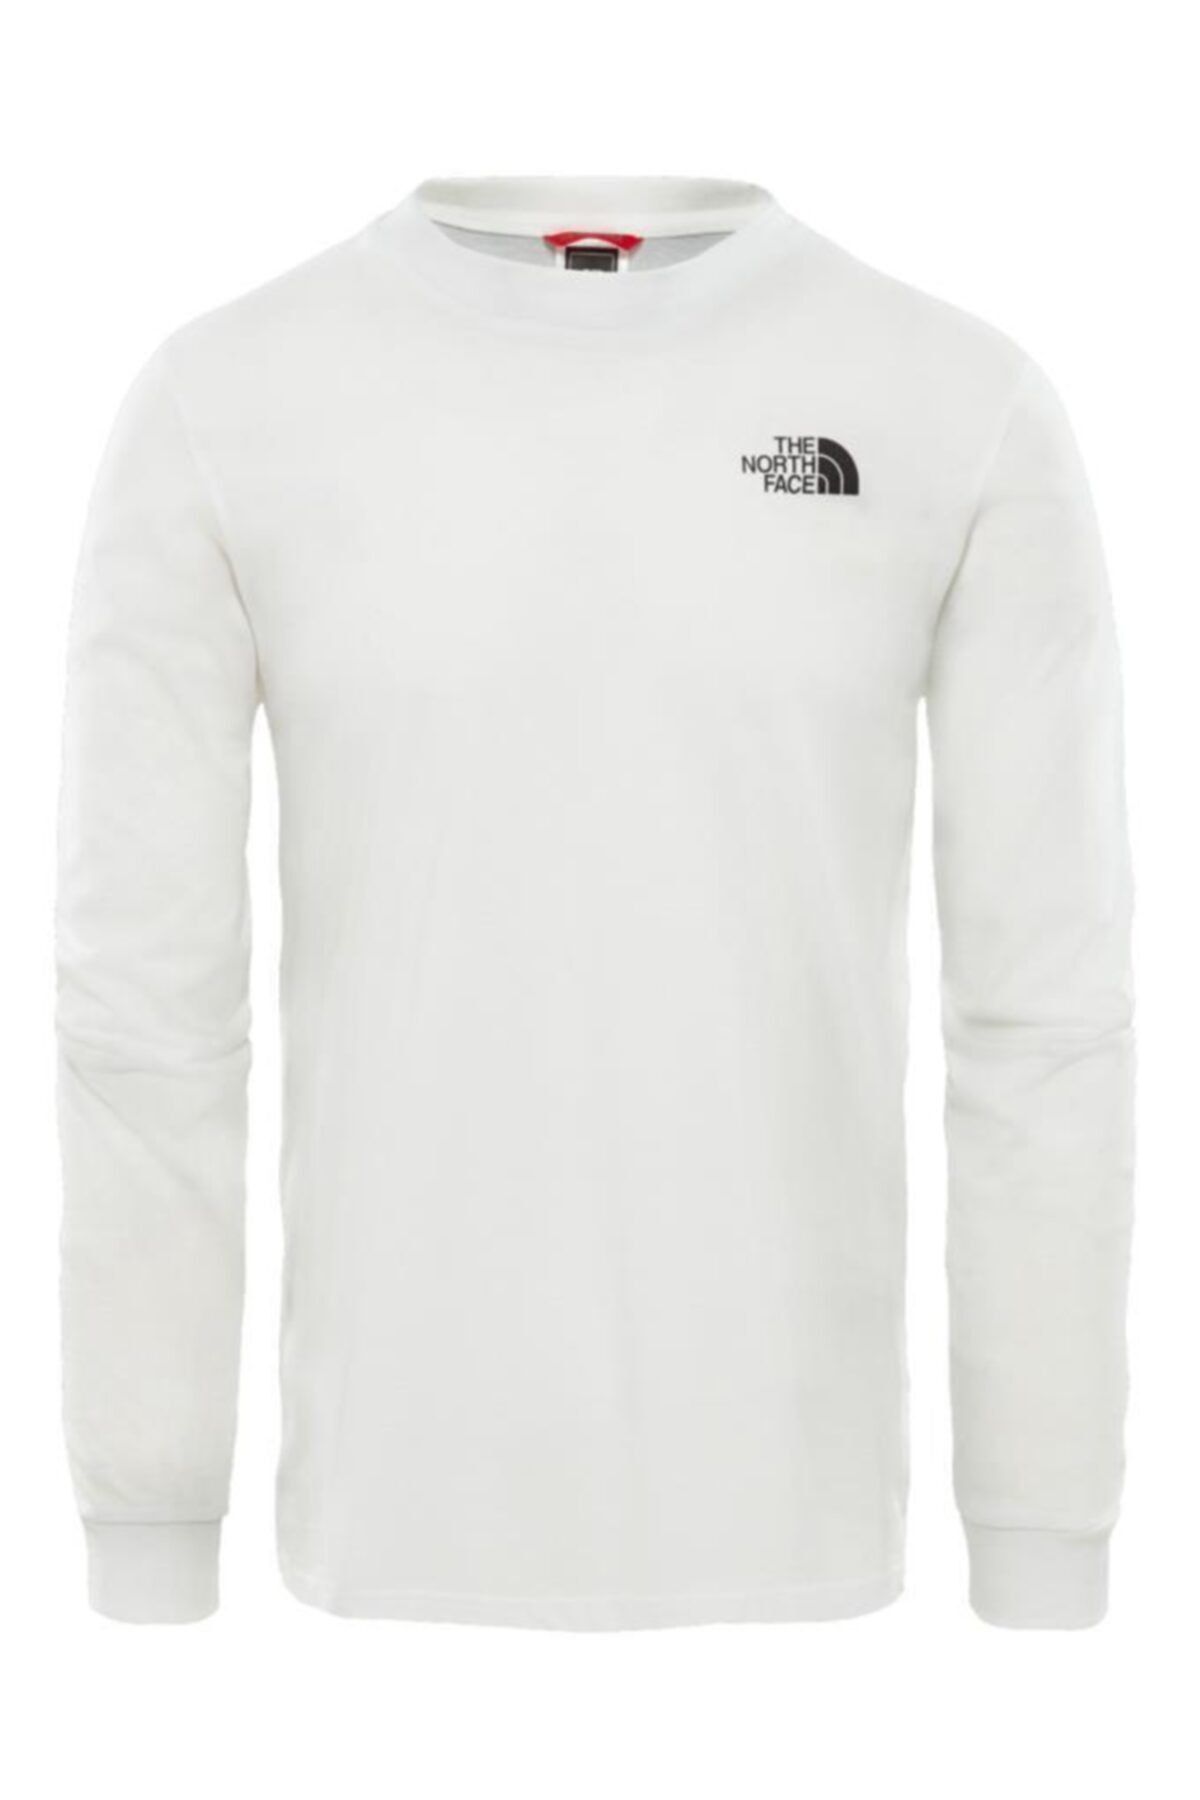 The North Face Simple Dome Tee Erkek T- Shirt Beyaz